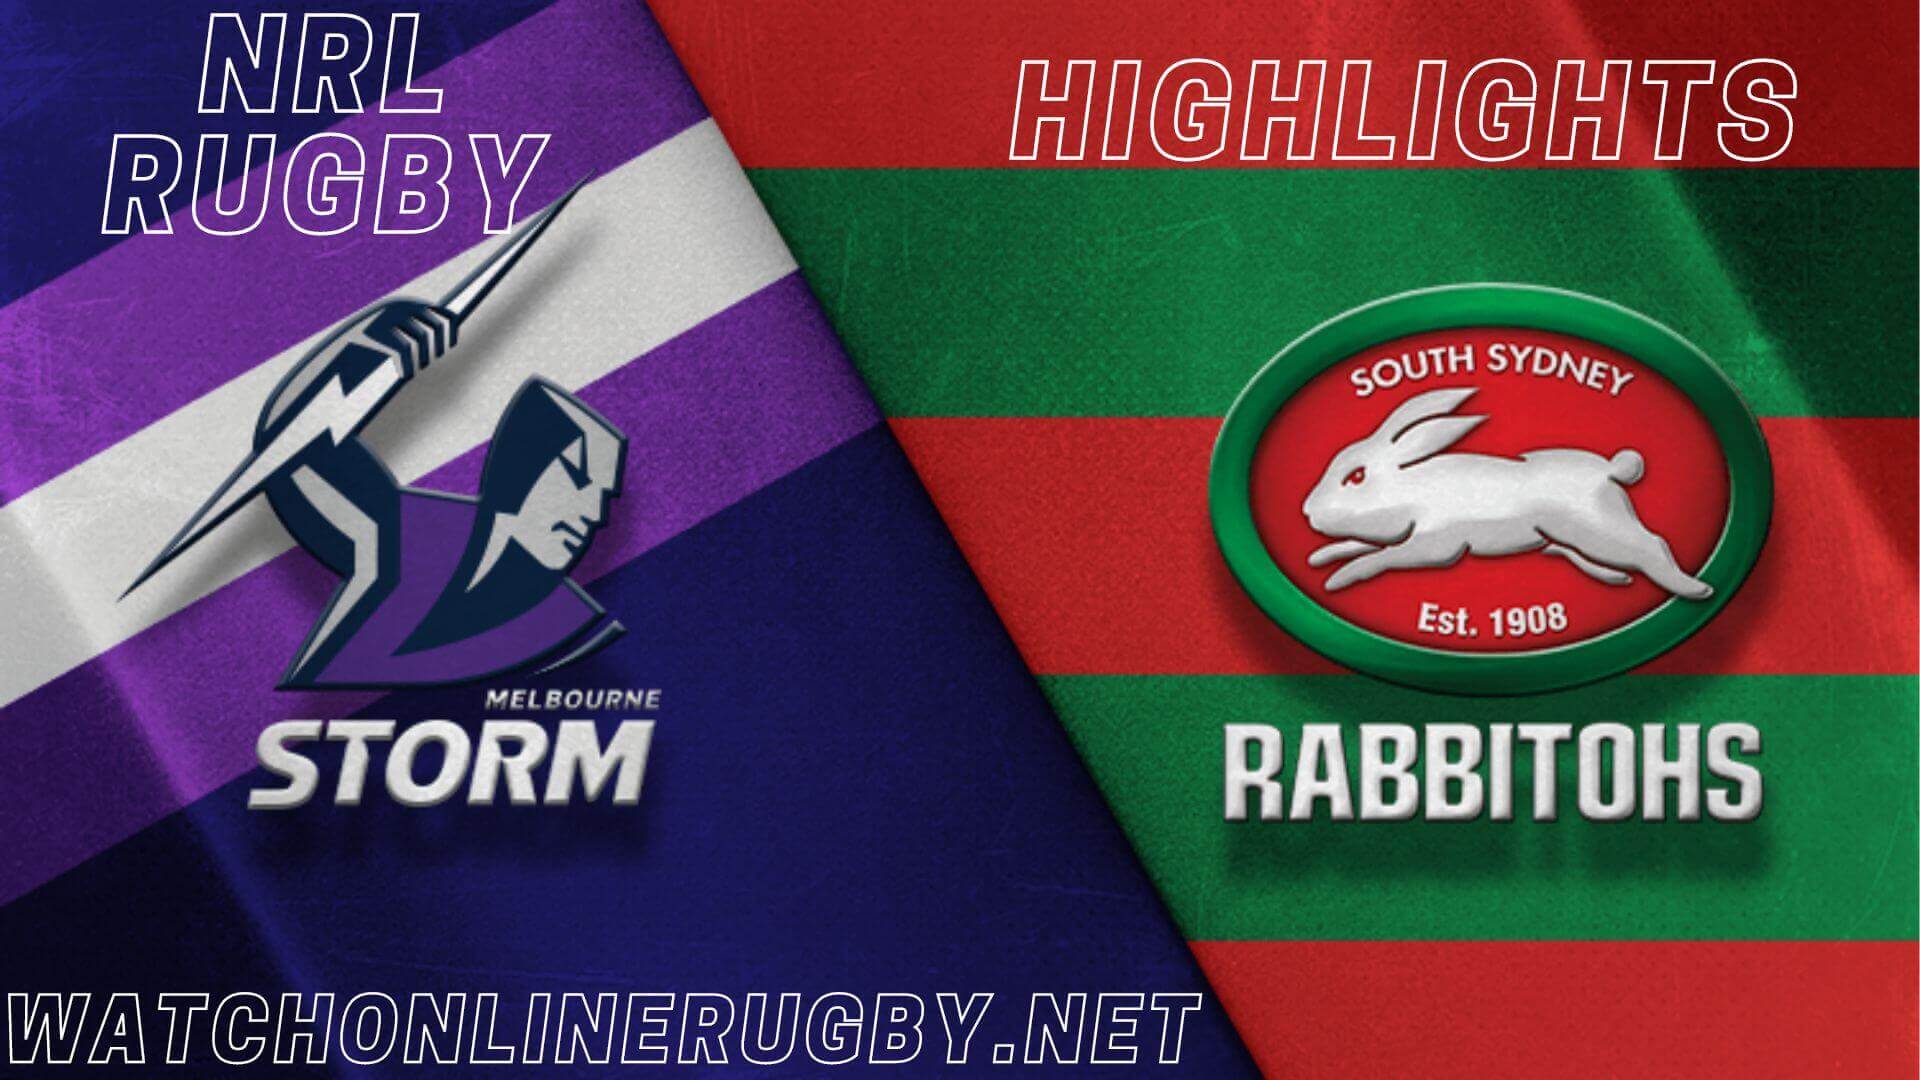 Rabbitohs Vs Storm Highlights RD 19 NRL Rugby